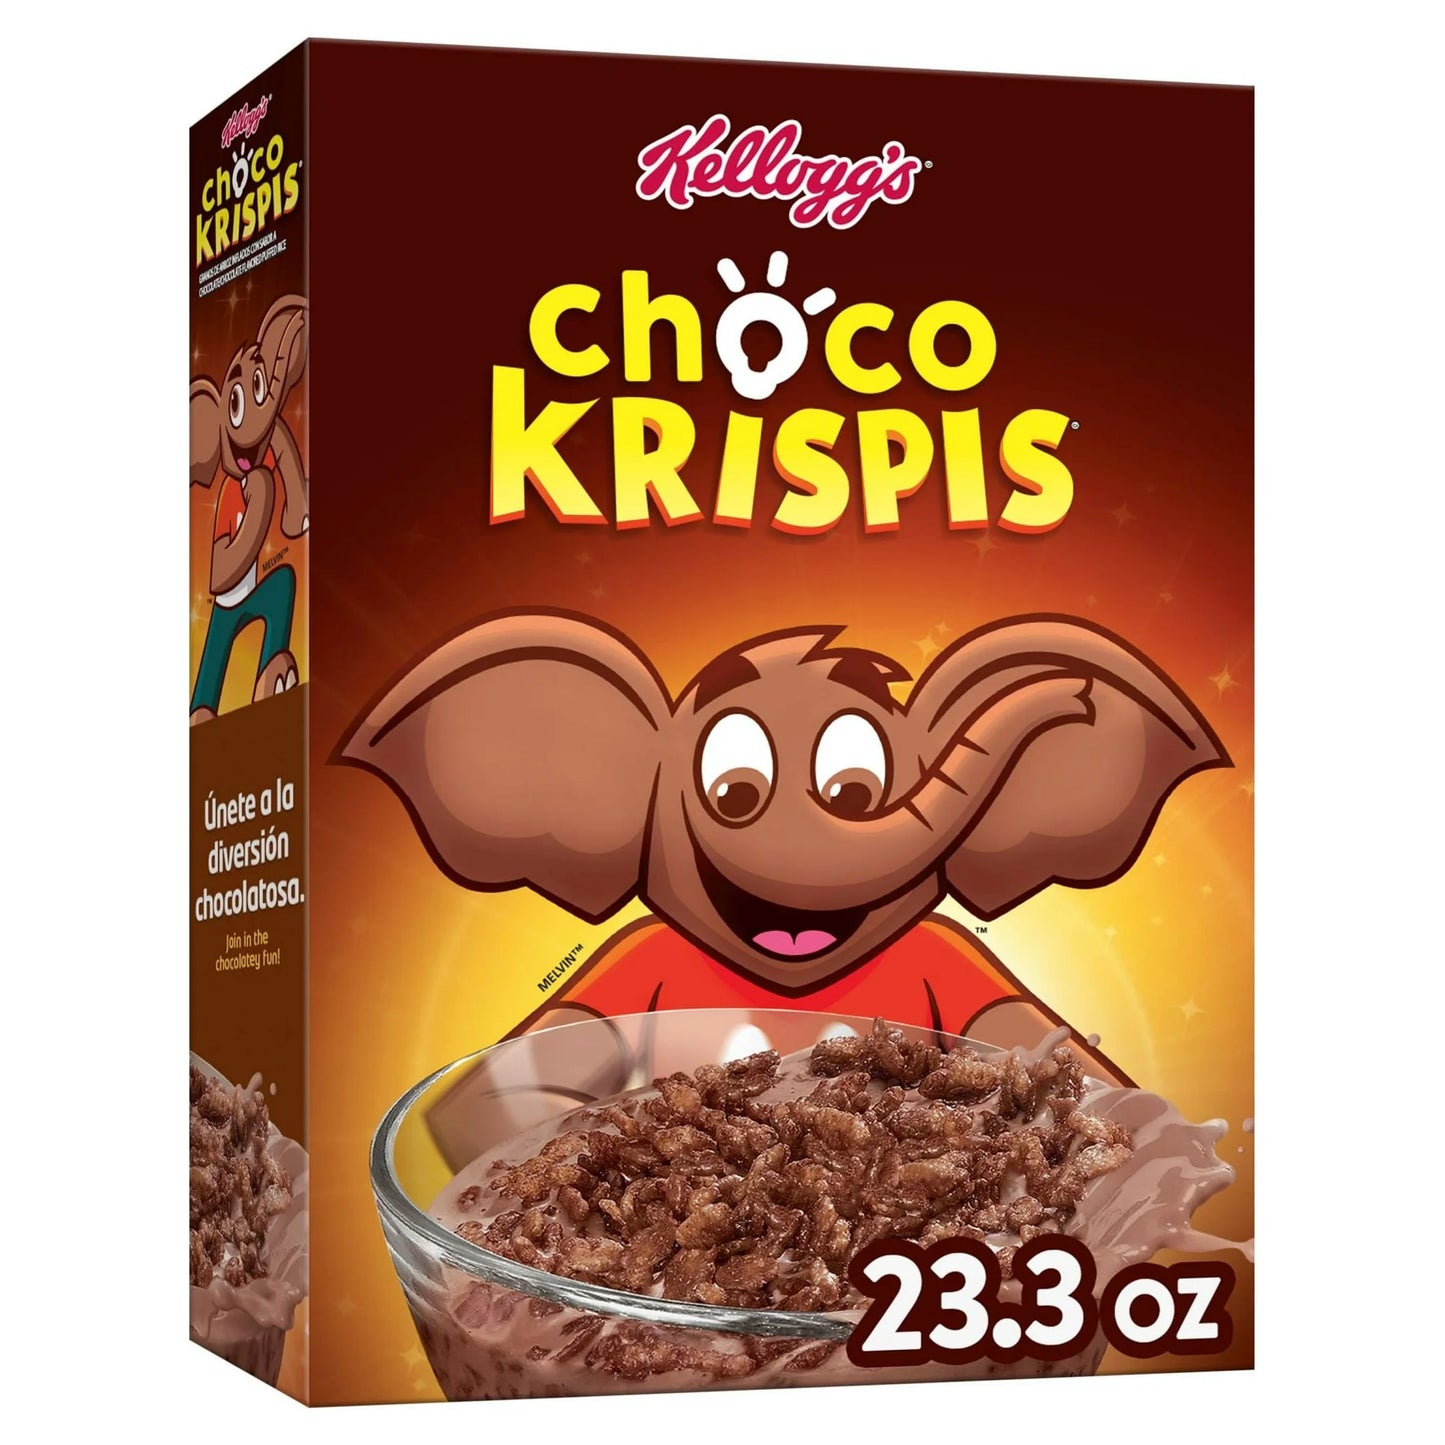 Kellogg's Choco Krispies Original Cold Breakfast Cereal, 23.3 oz